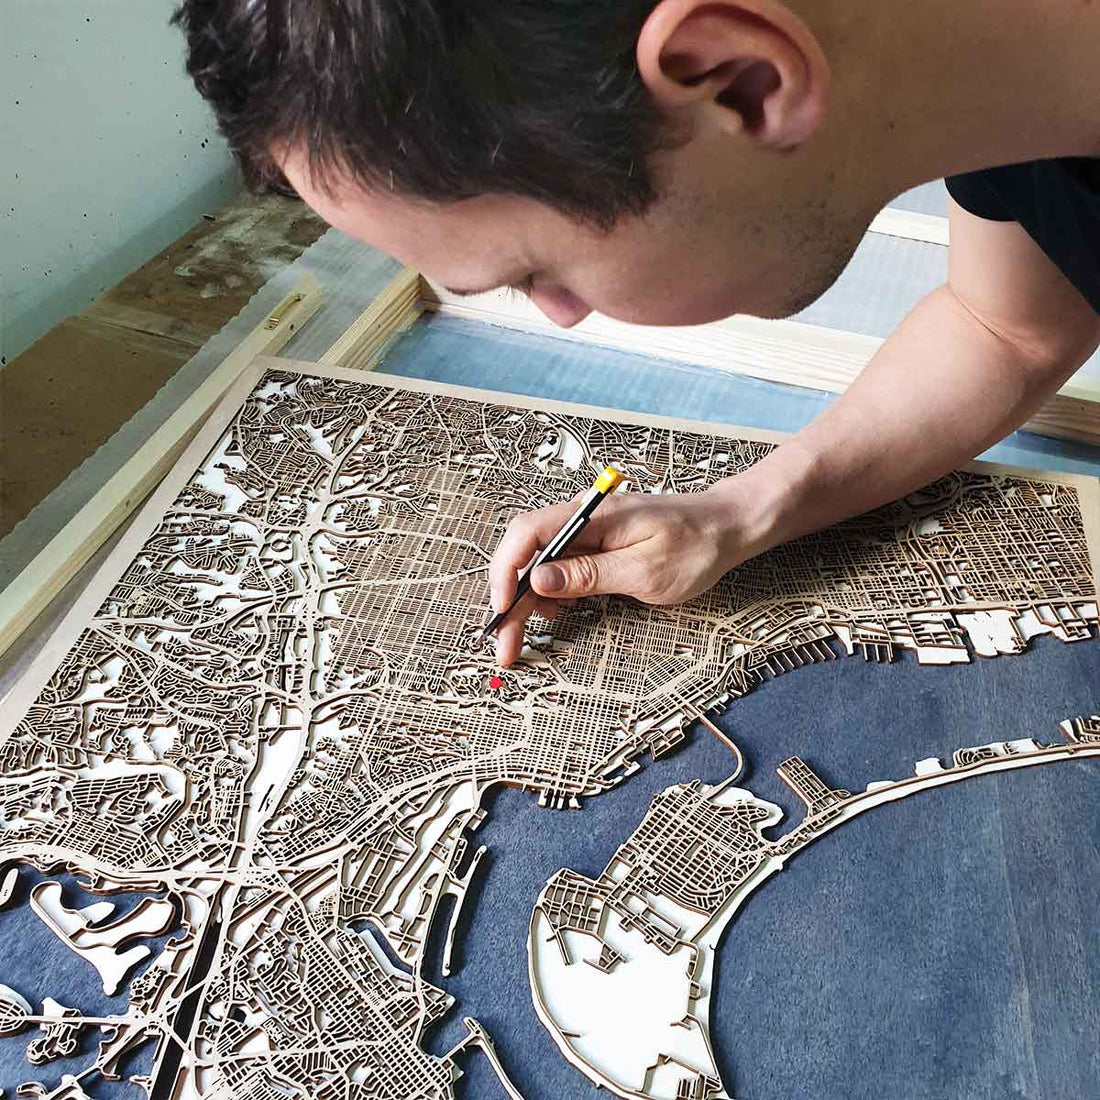 Laser Cut Maps - wooden map art work- CityWood